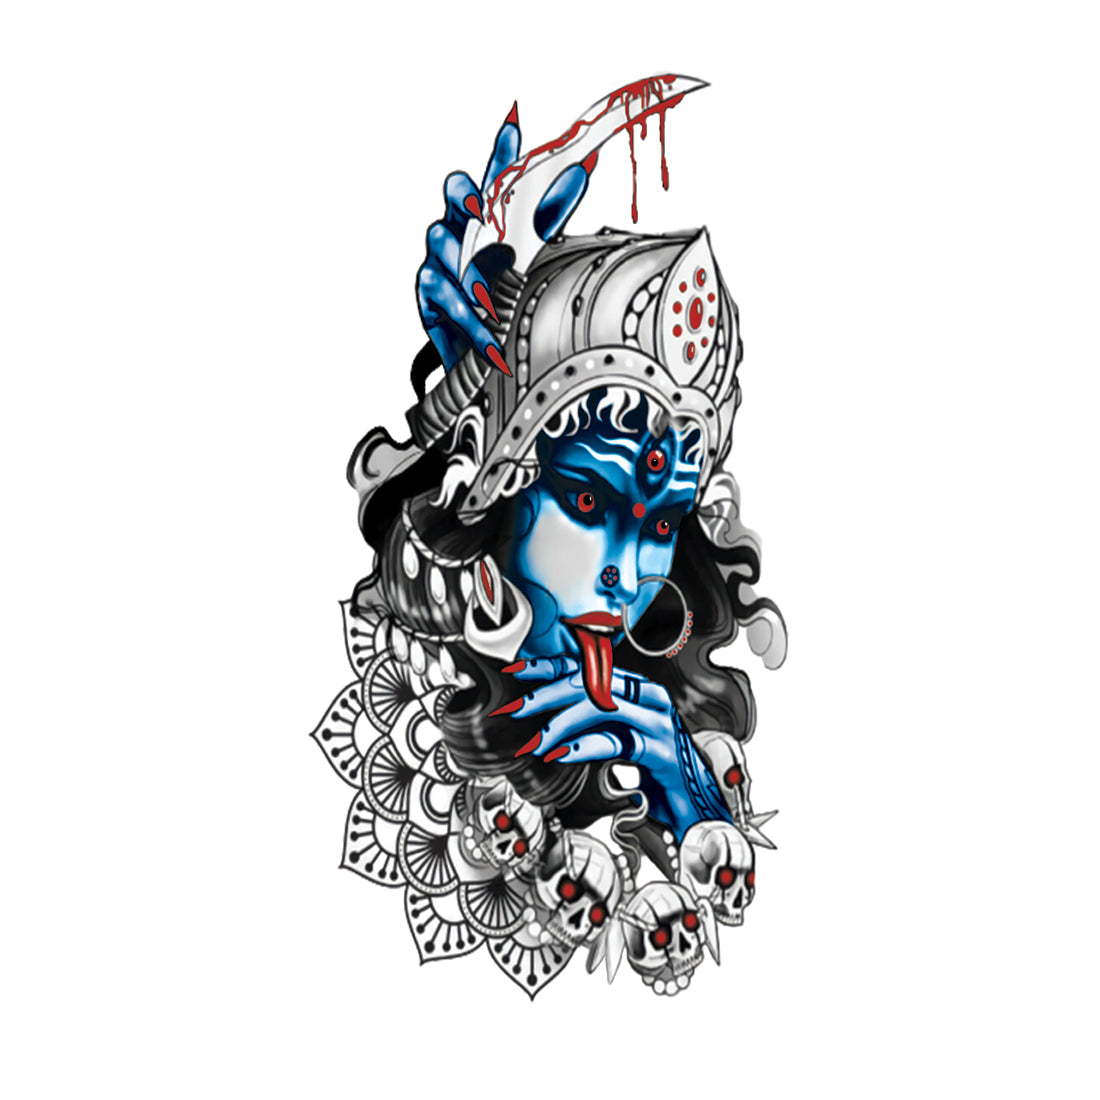 Kali Uchis Tattoo Design Idea - OhMyTat